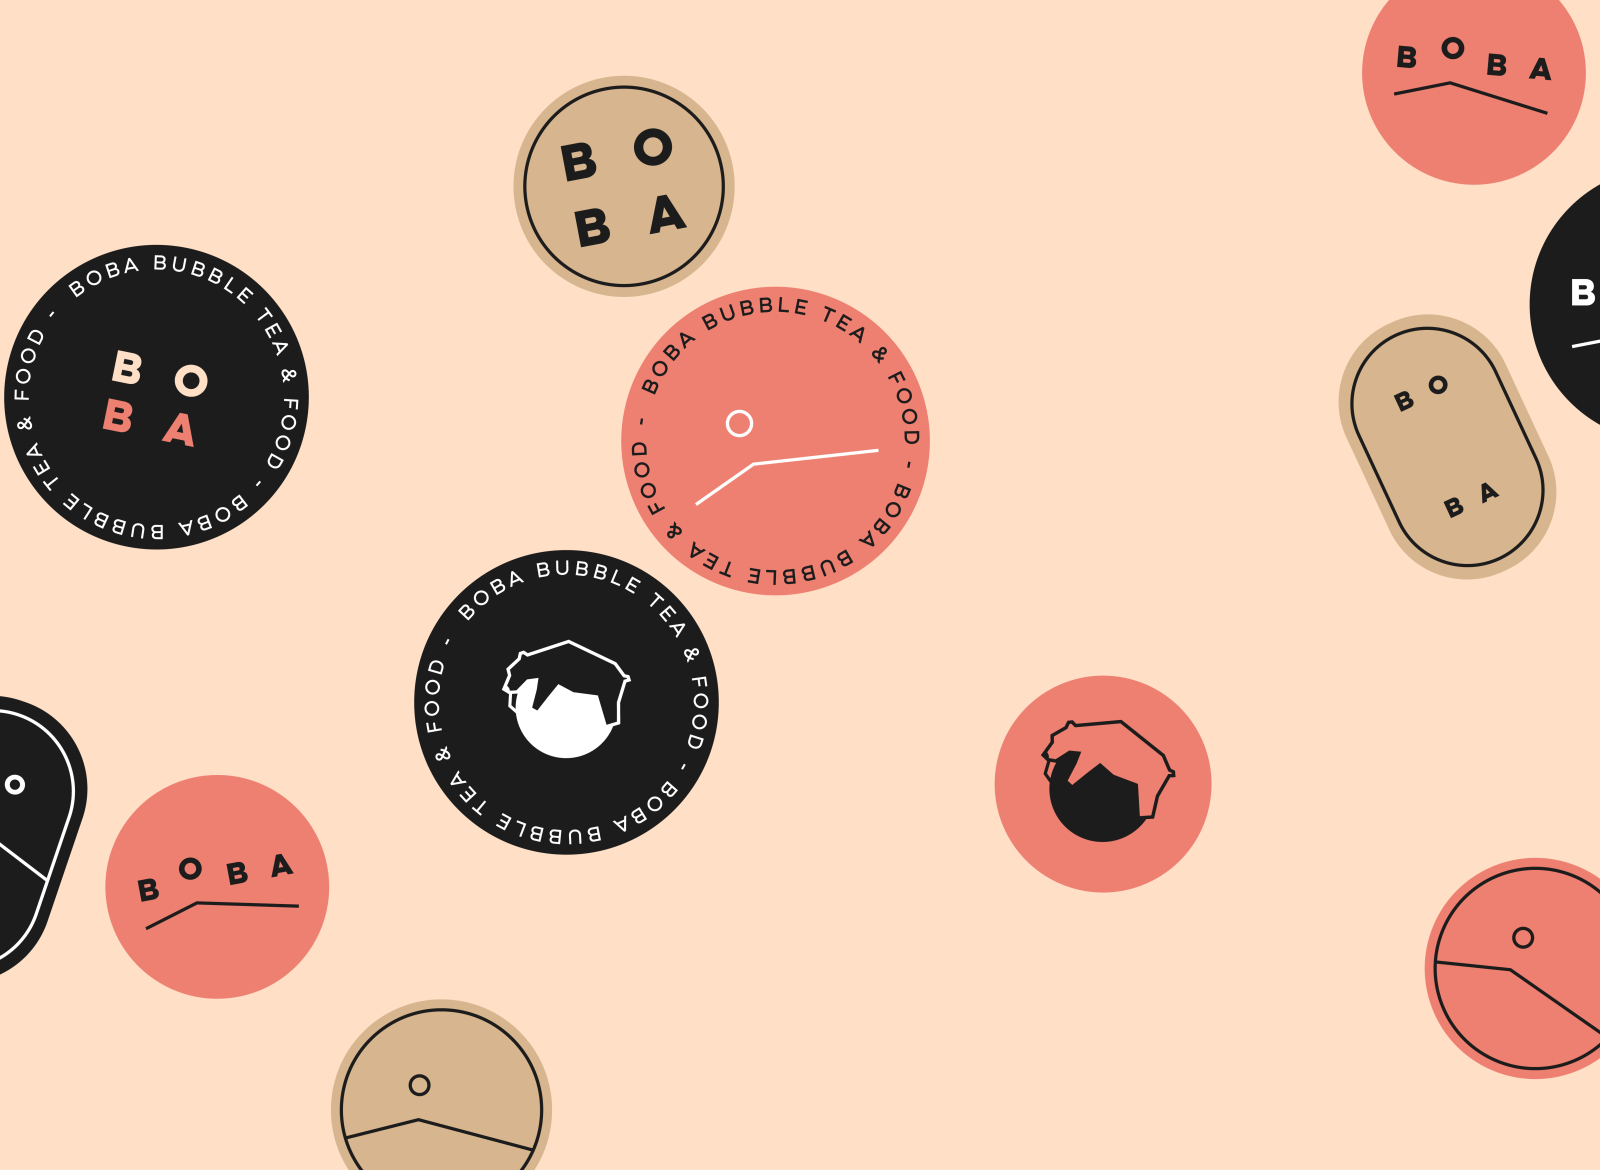 BOBA Bubble Tea & Food - Stickers by Elisabetta Vedovato on Dribbble